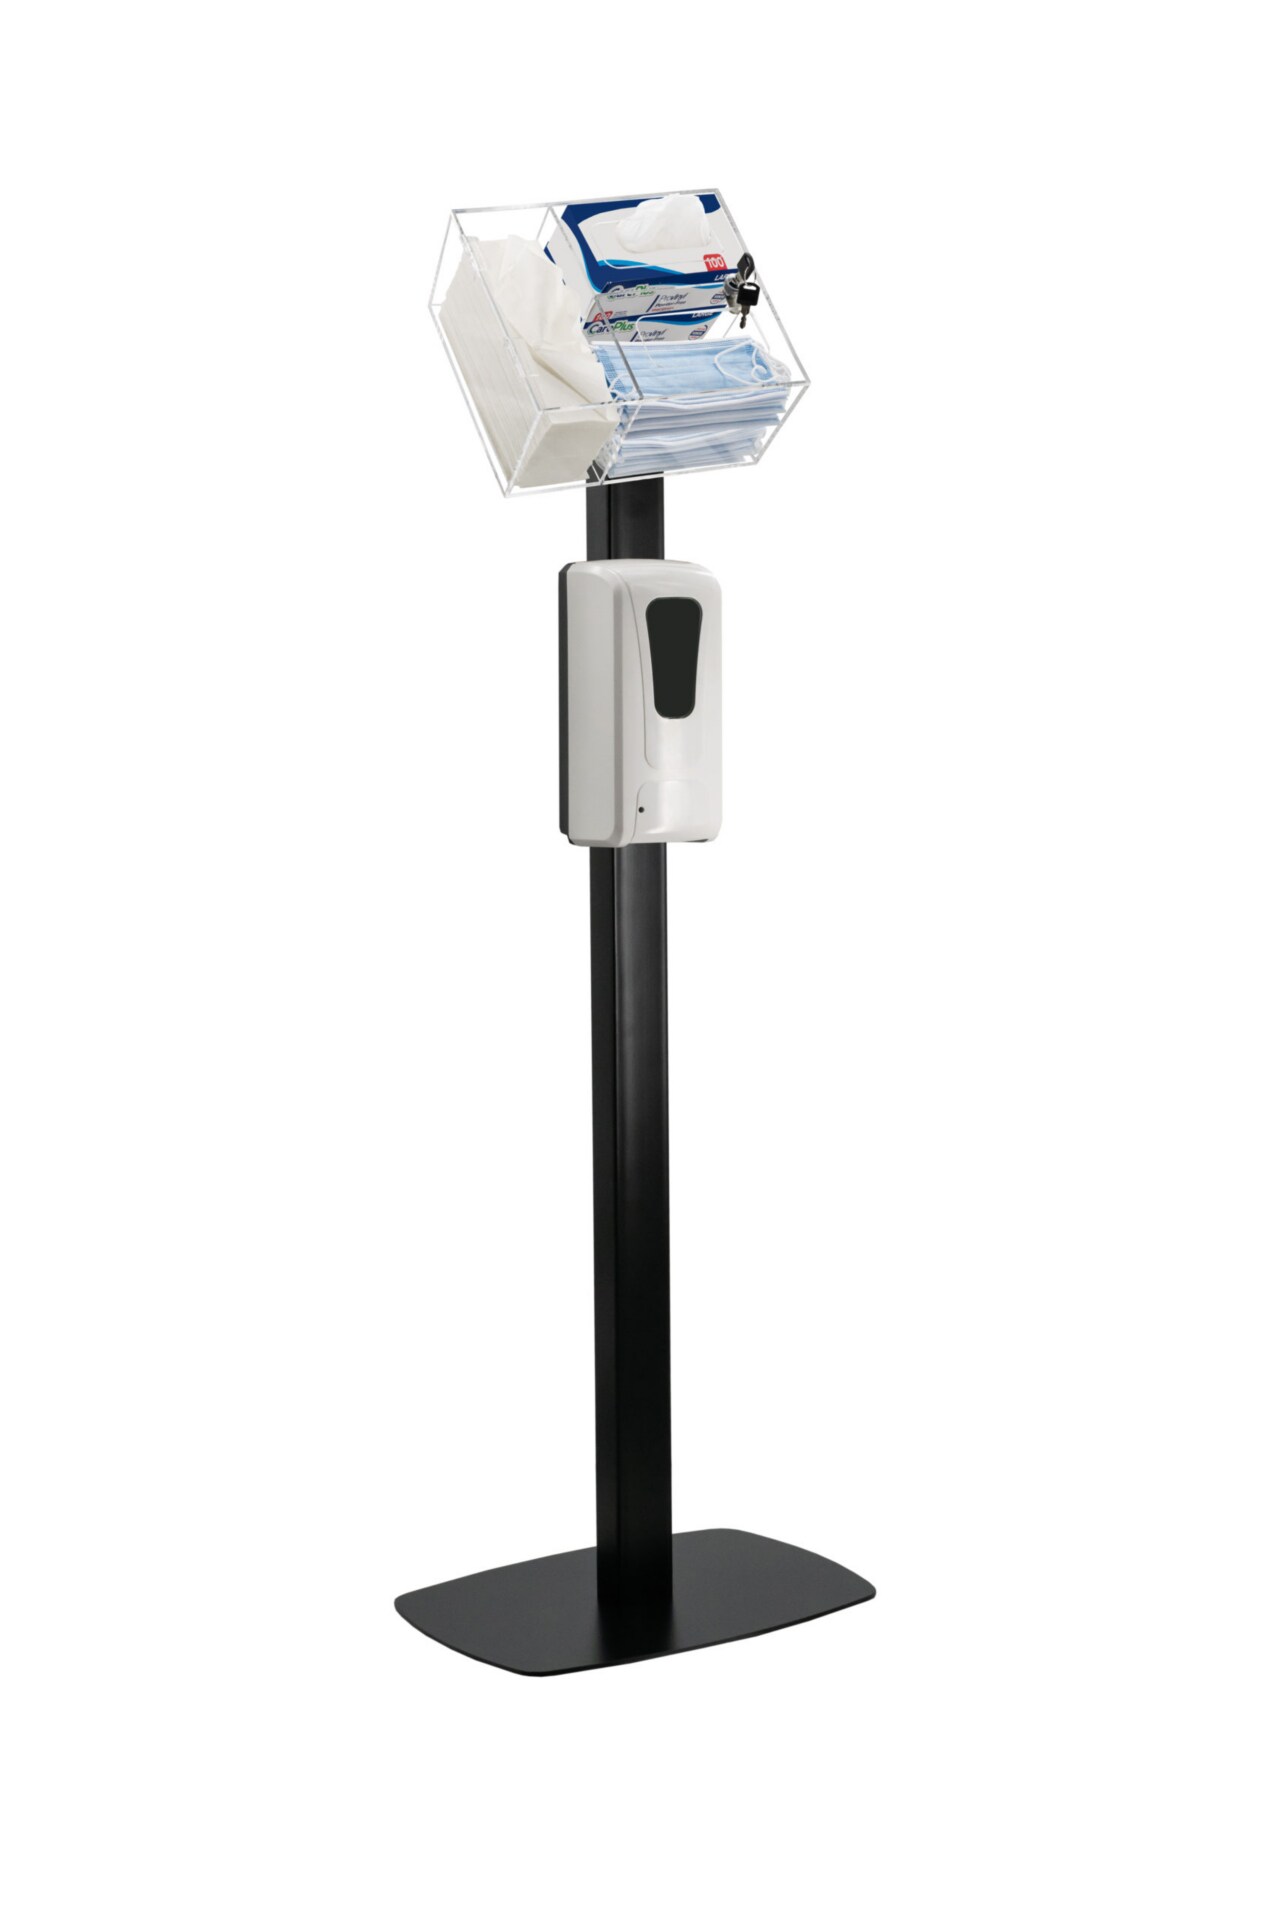 CTA Premium Thin Profile Sanitizing Station - hand sanitizer/soap dispenser